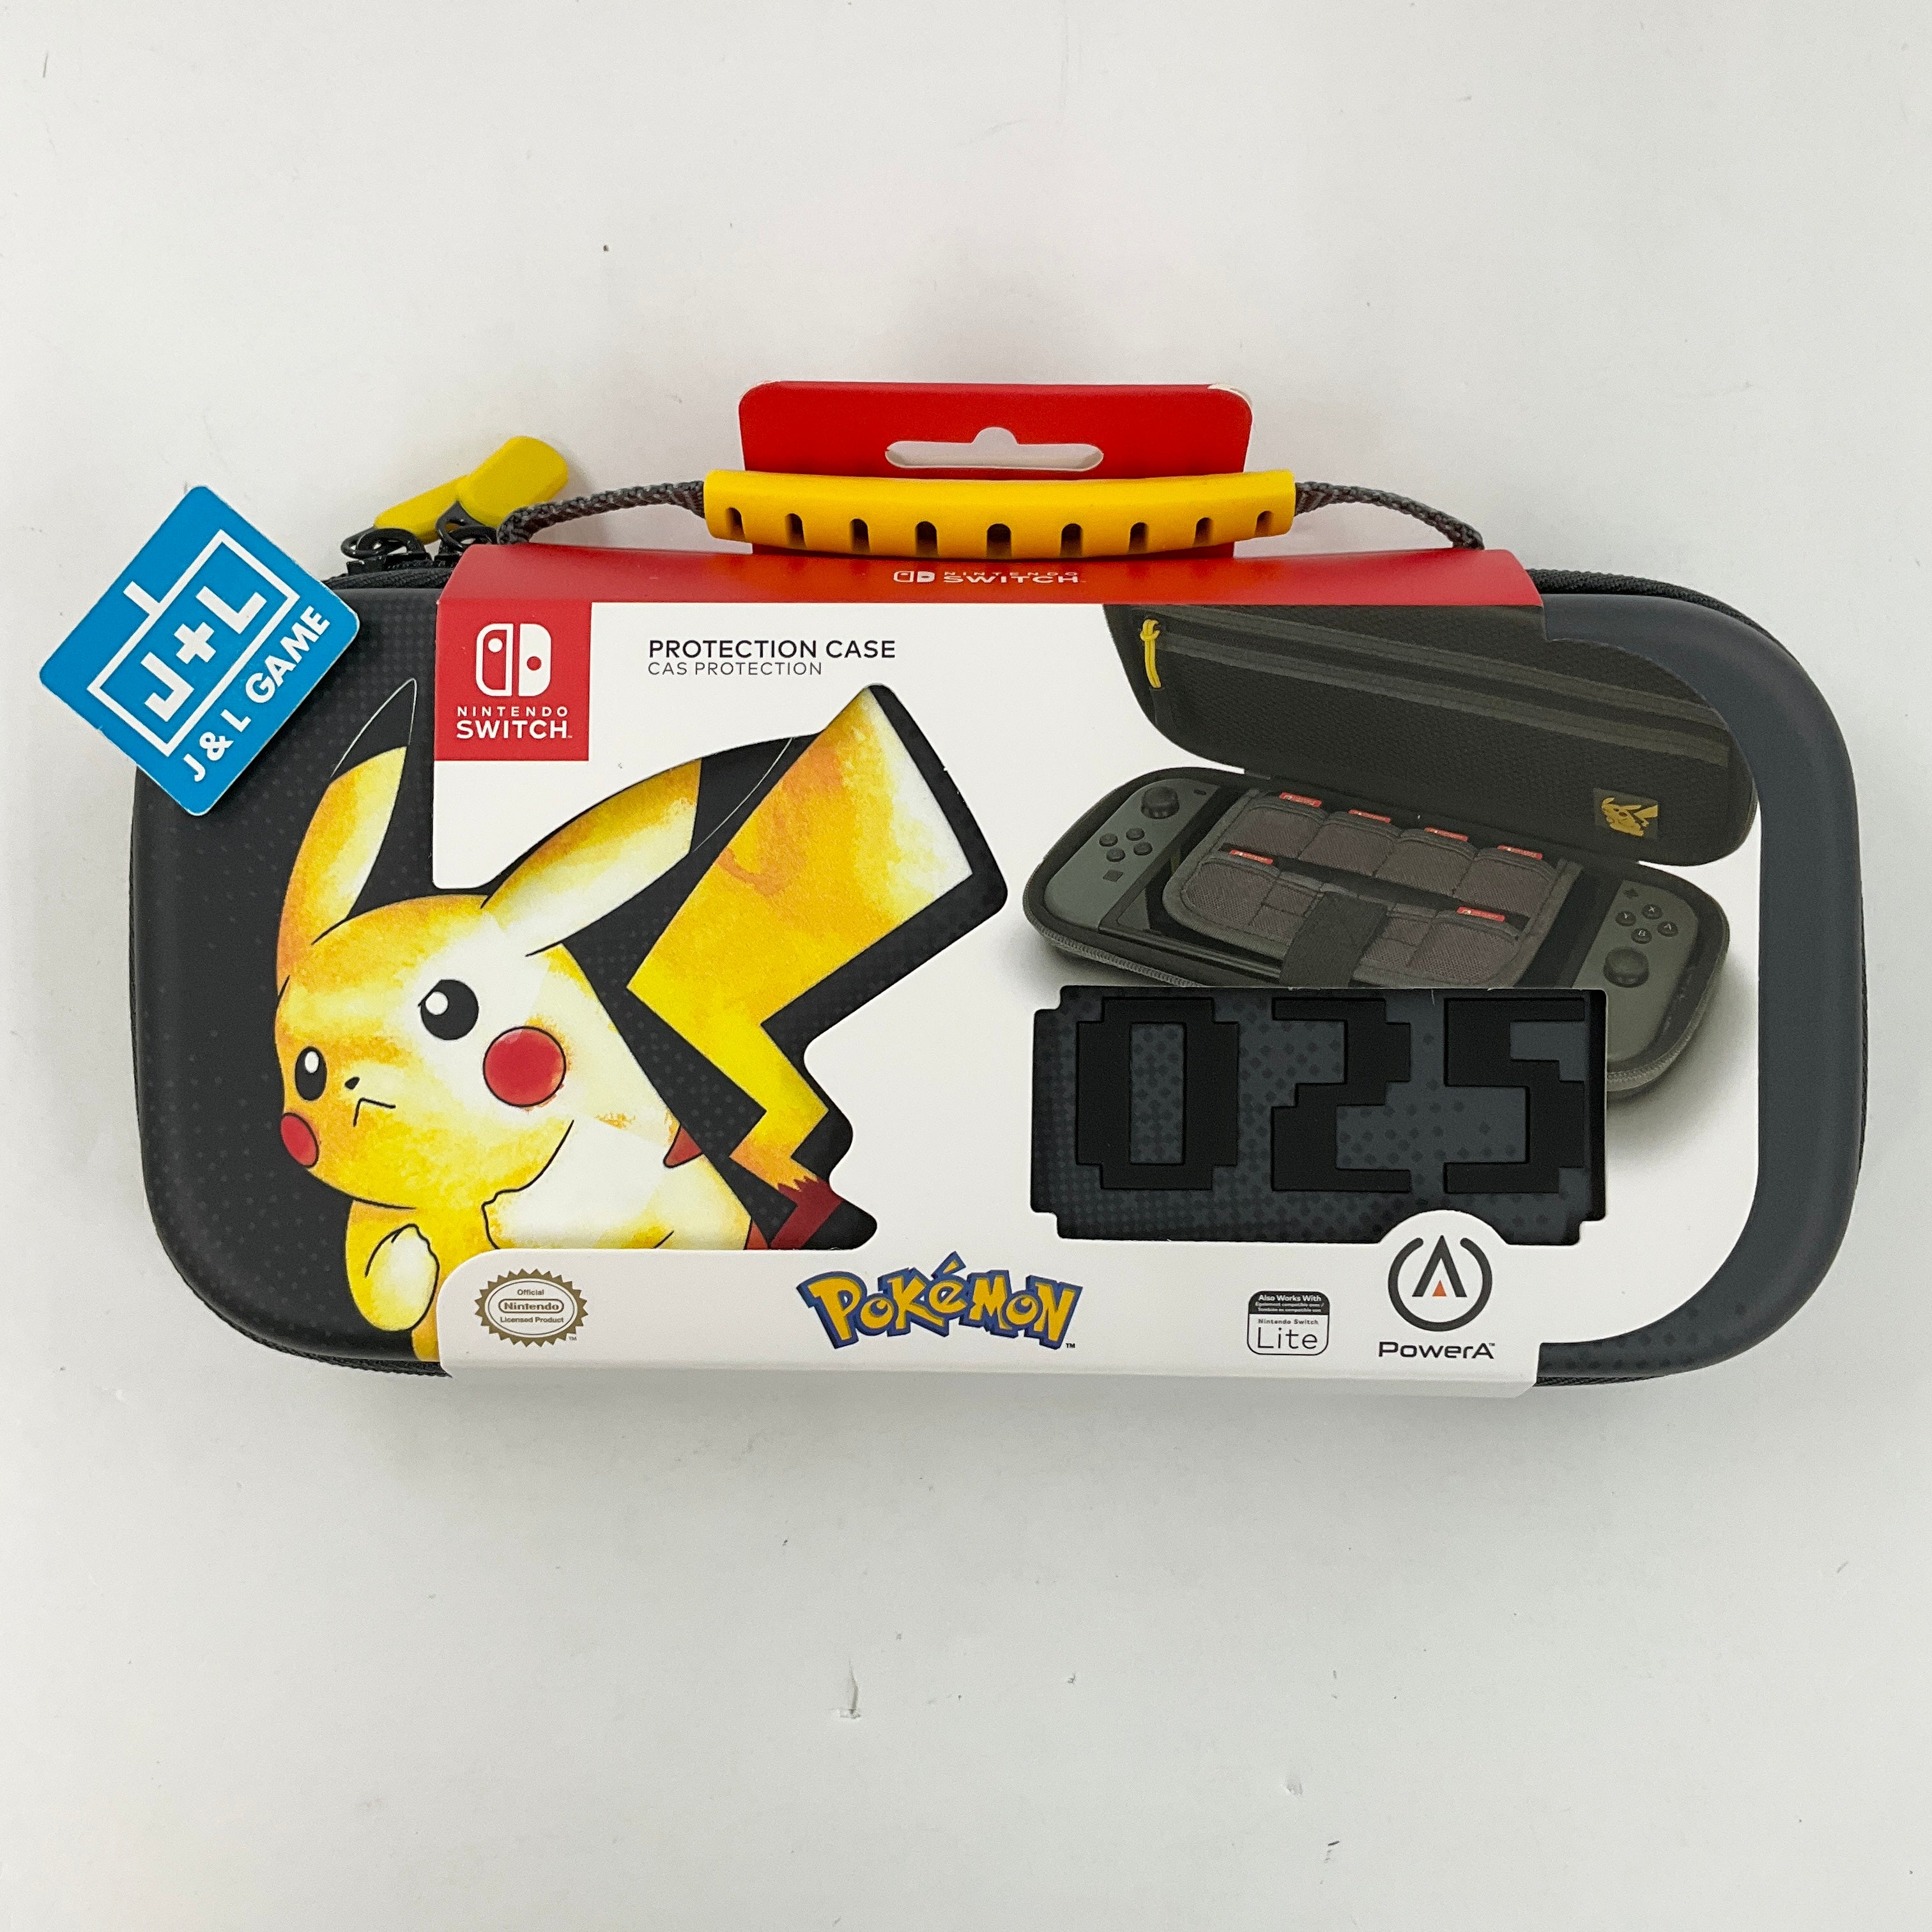 PowerA Protection Case (Pikachu 025) - (NSW) Nintendo Switch Accessories PowerA   